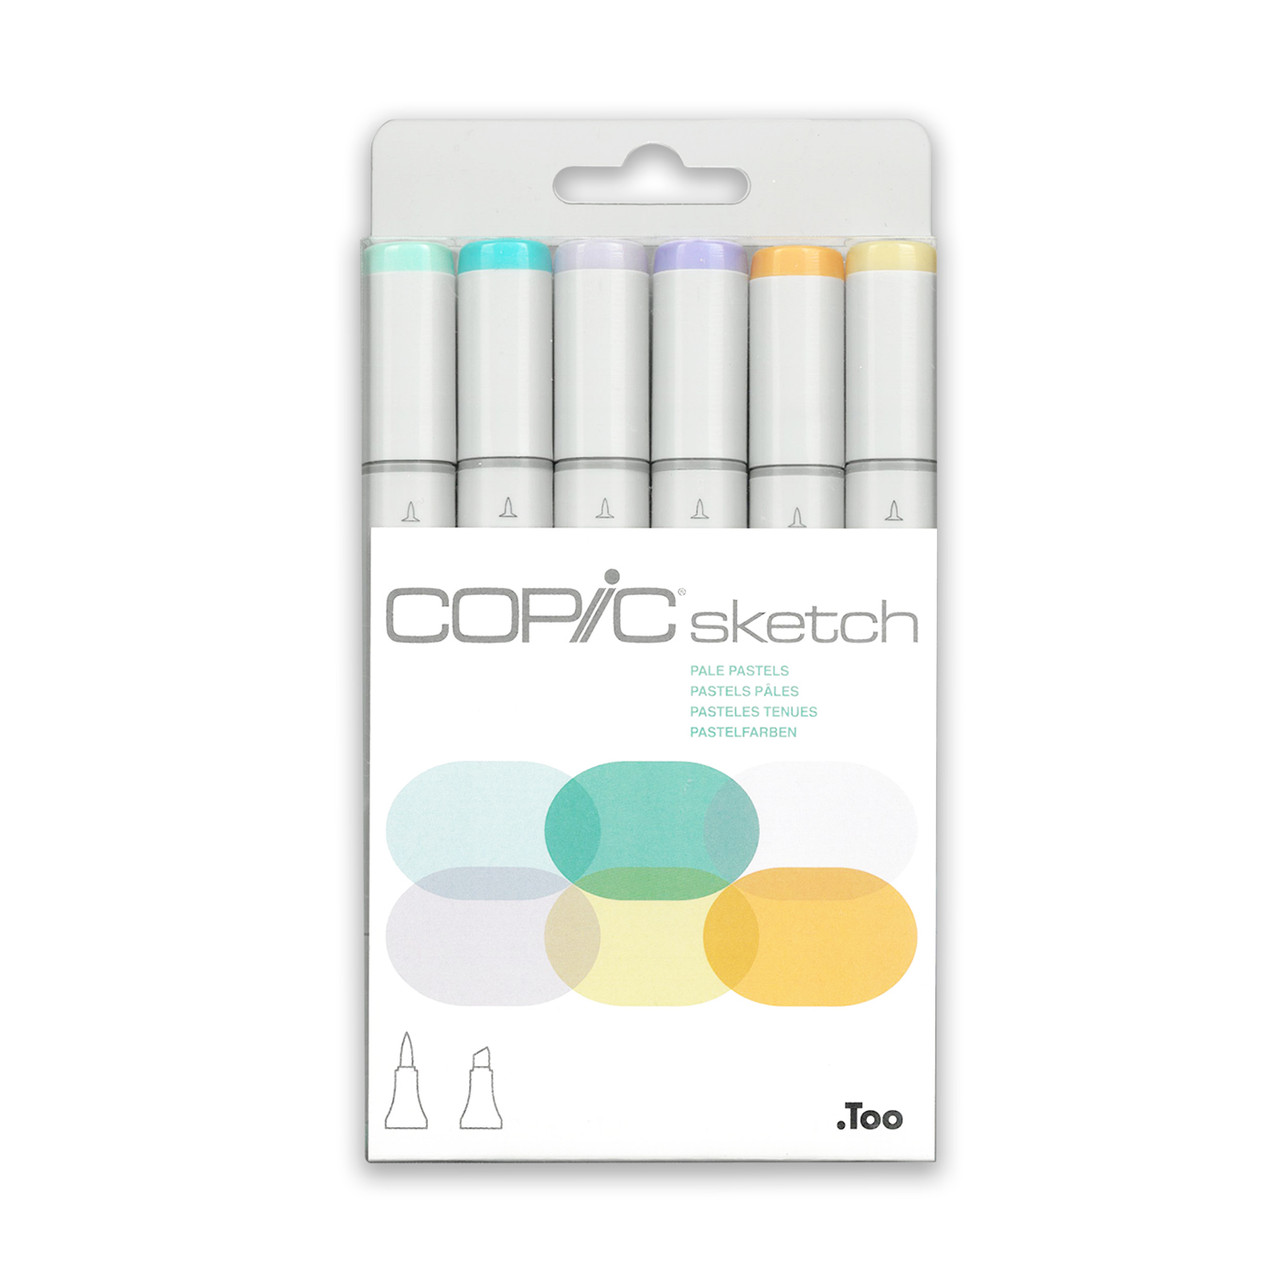 Copic Sketch 6 Marker Set - Earth Essentials